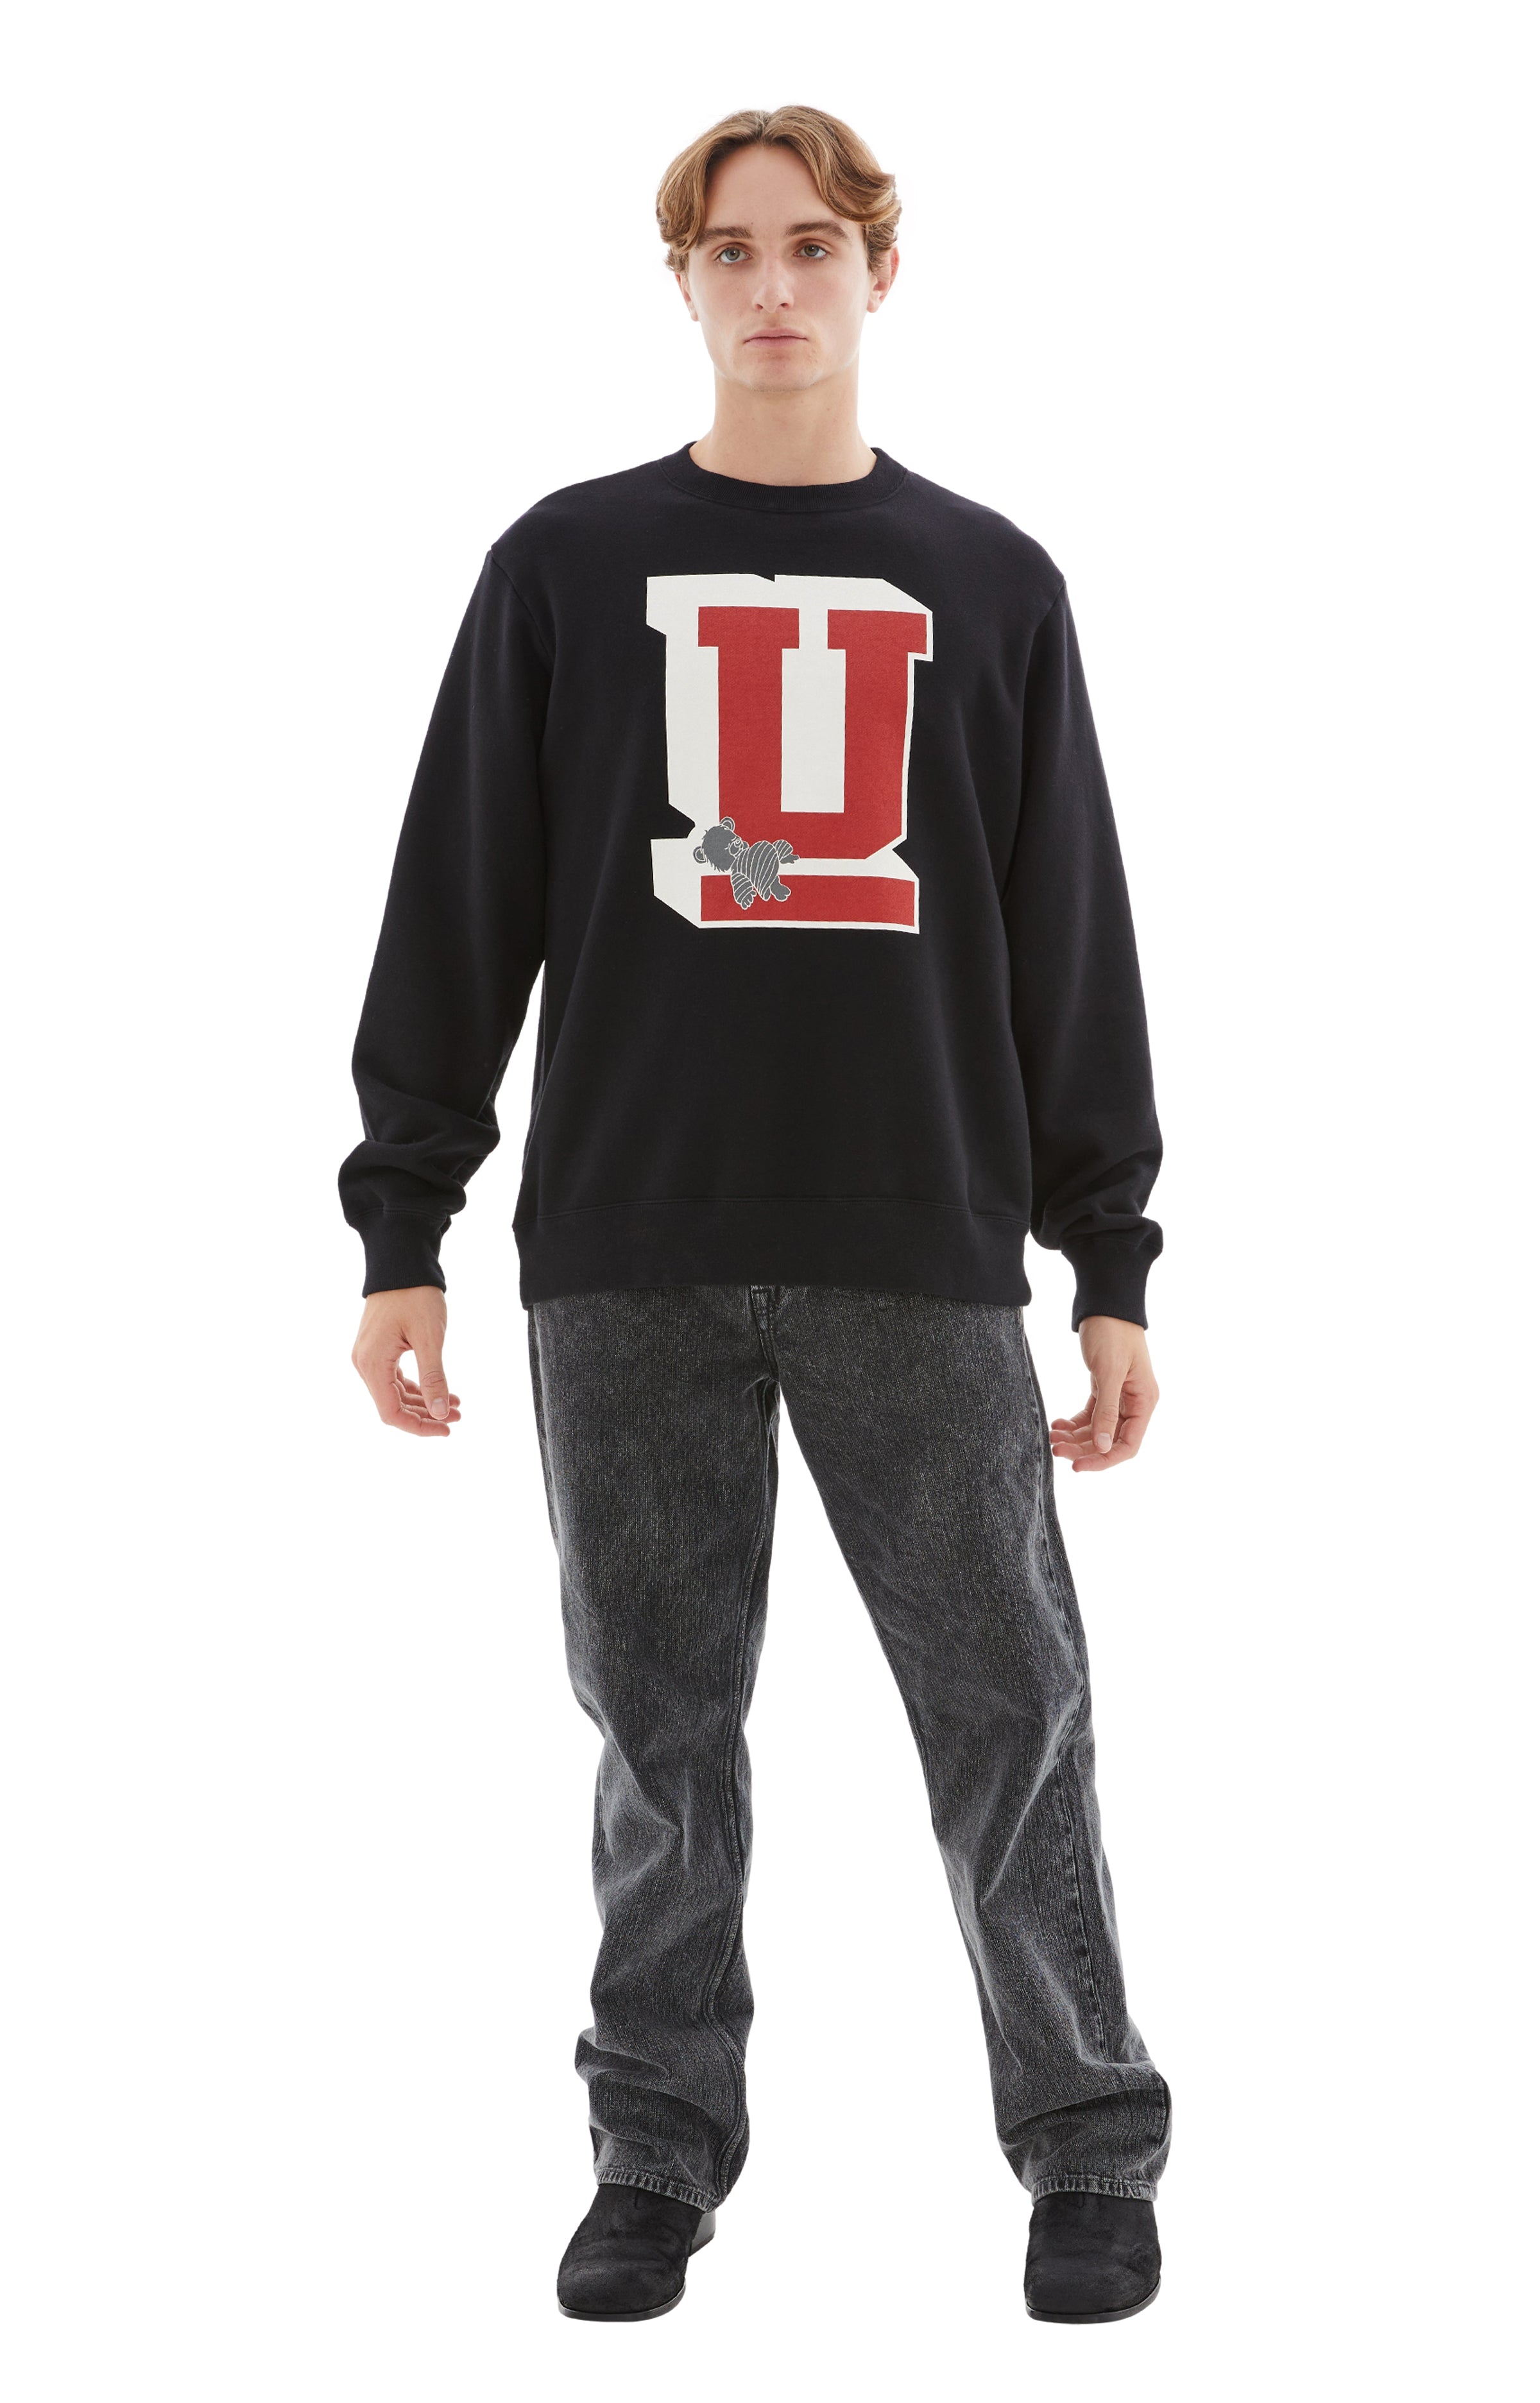 U' College Sweatshirt (Black)